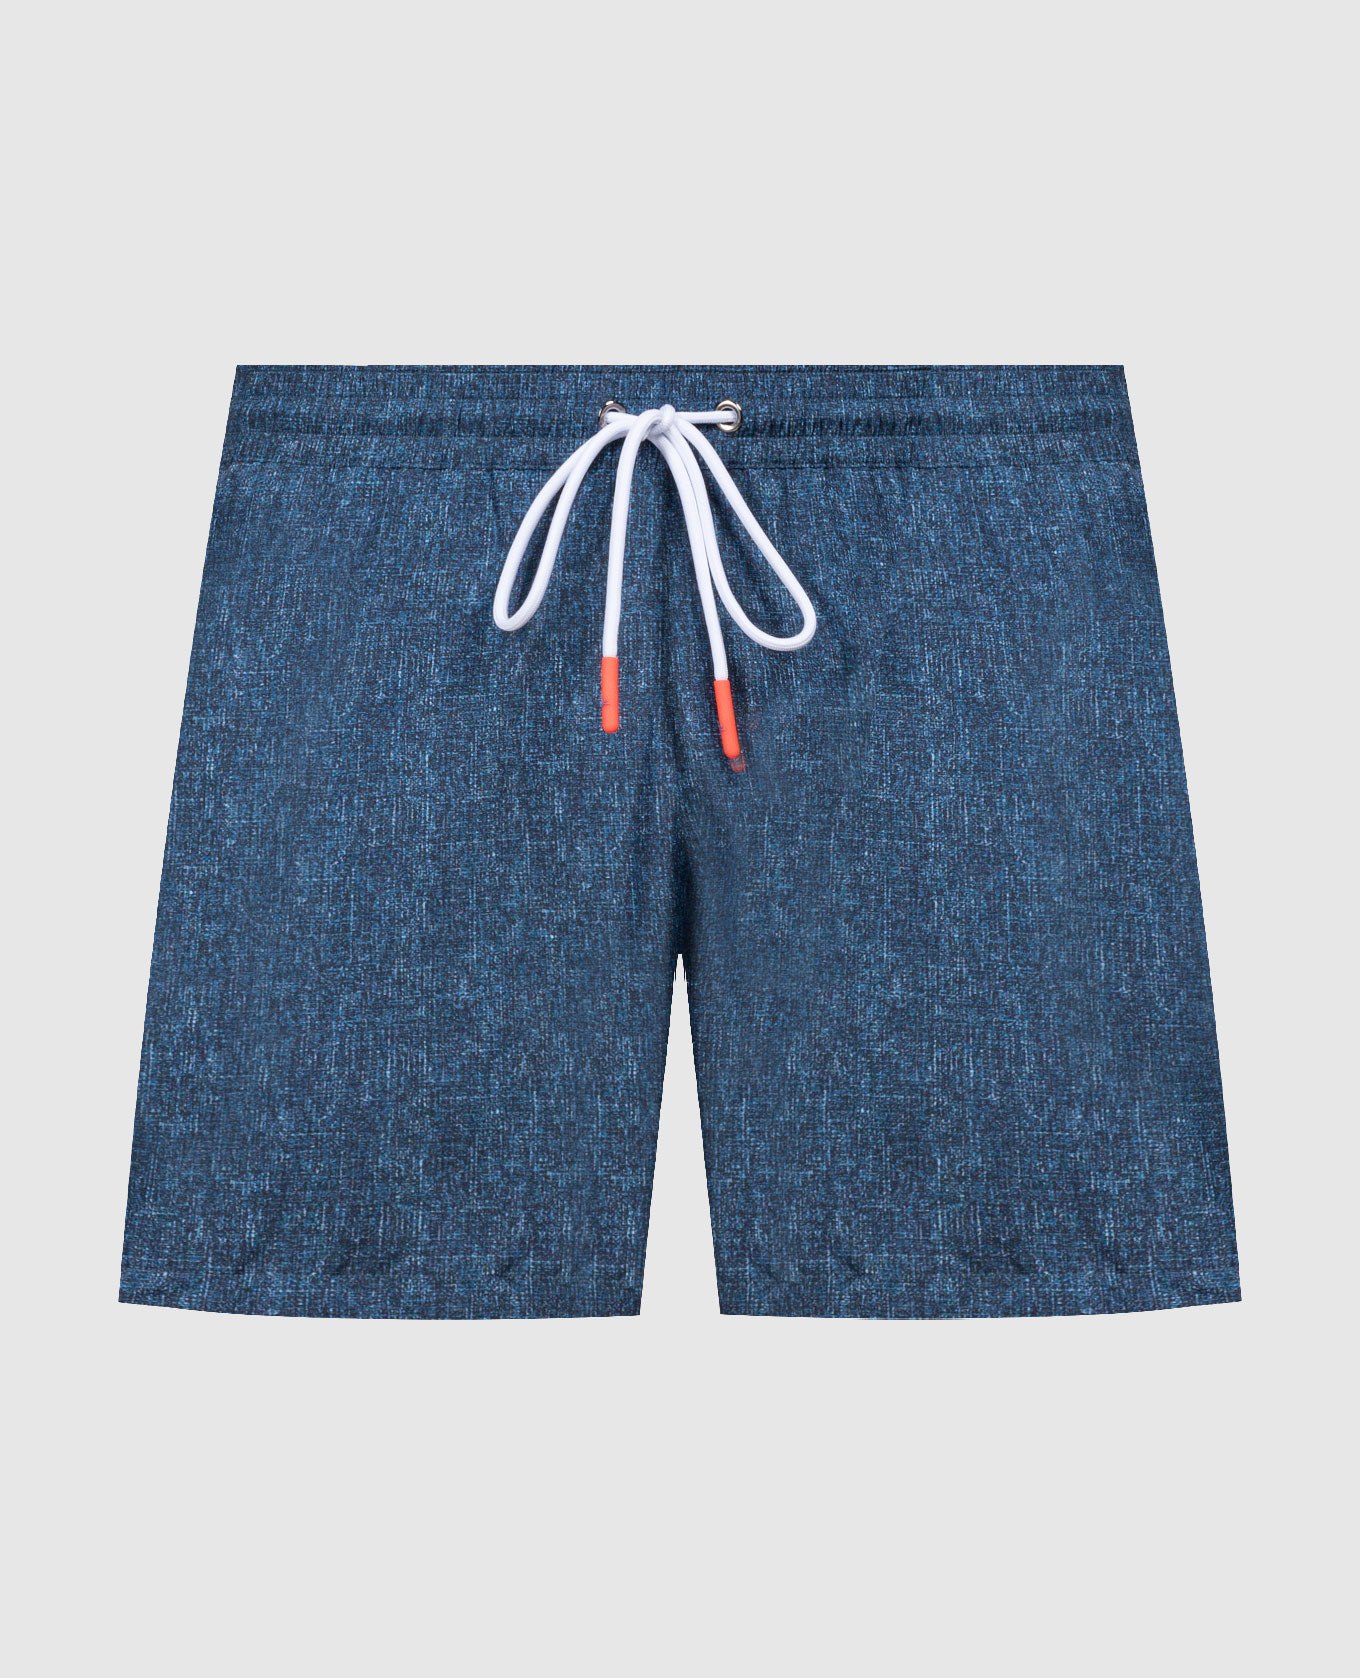 Blue printed swimming shorts